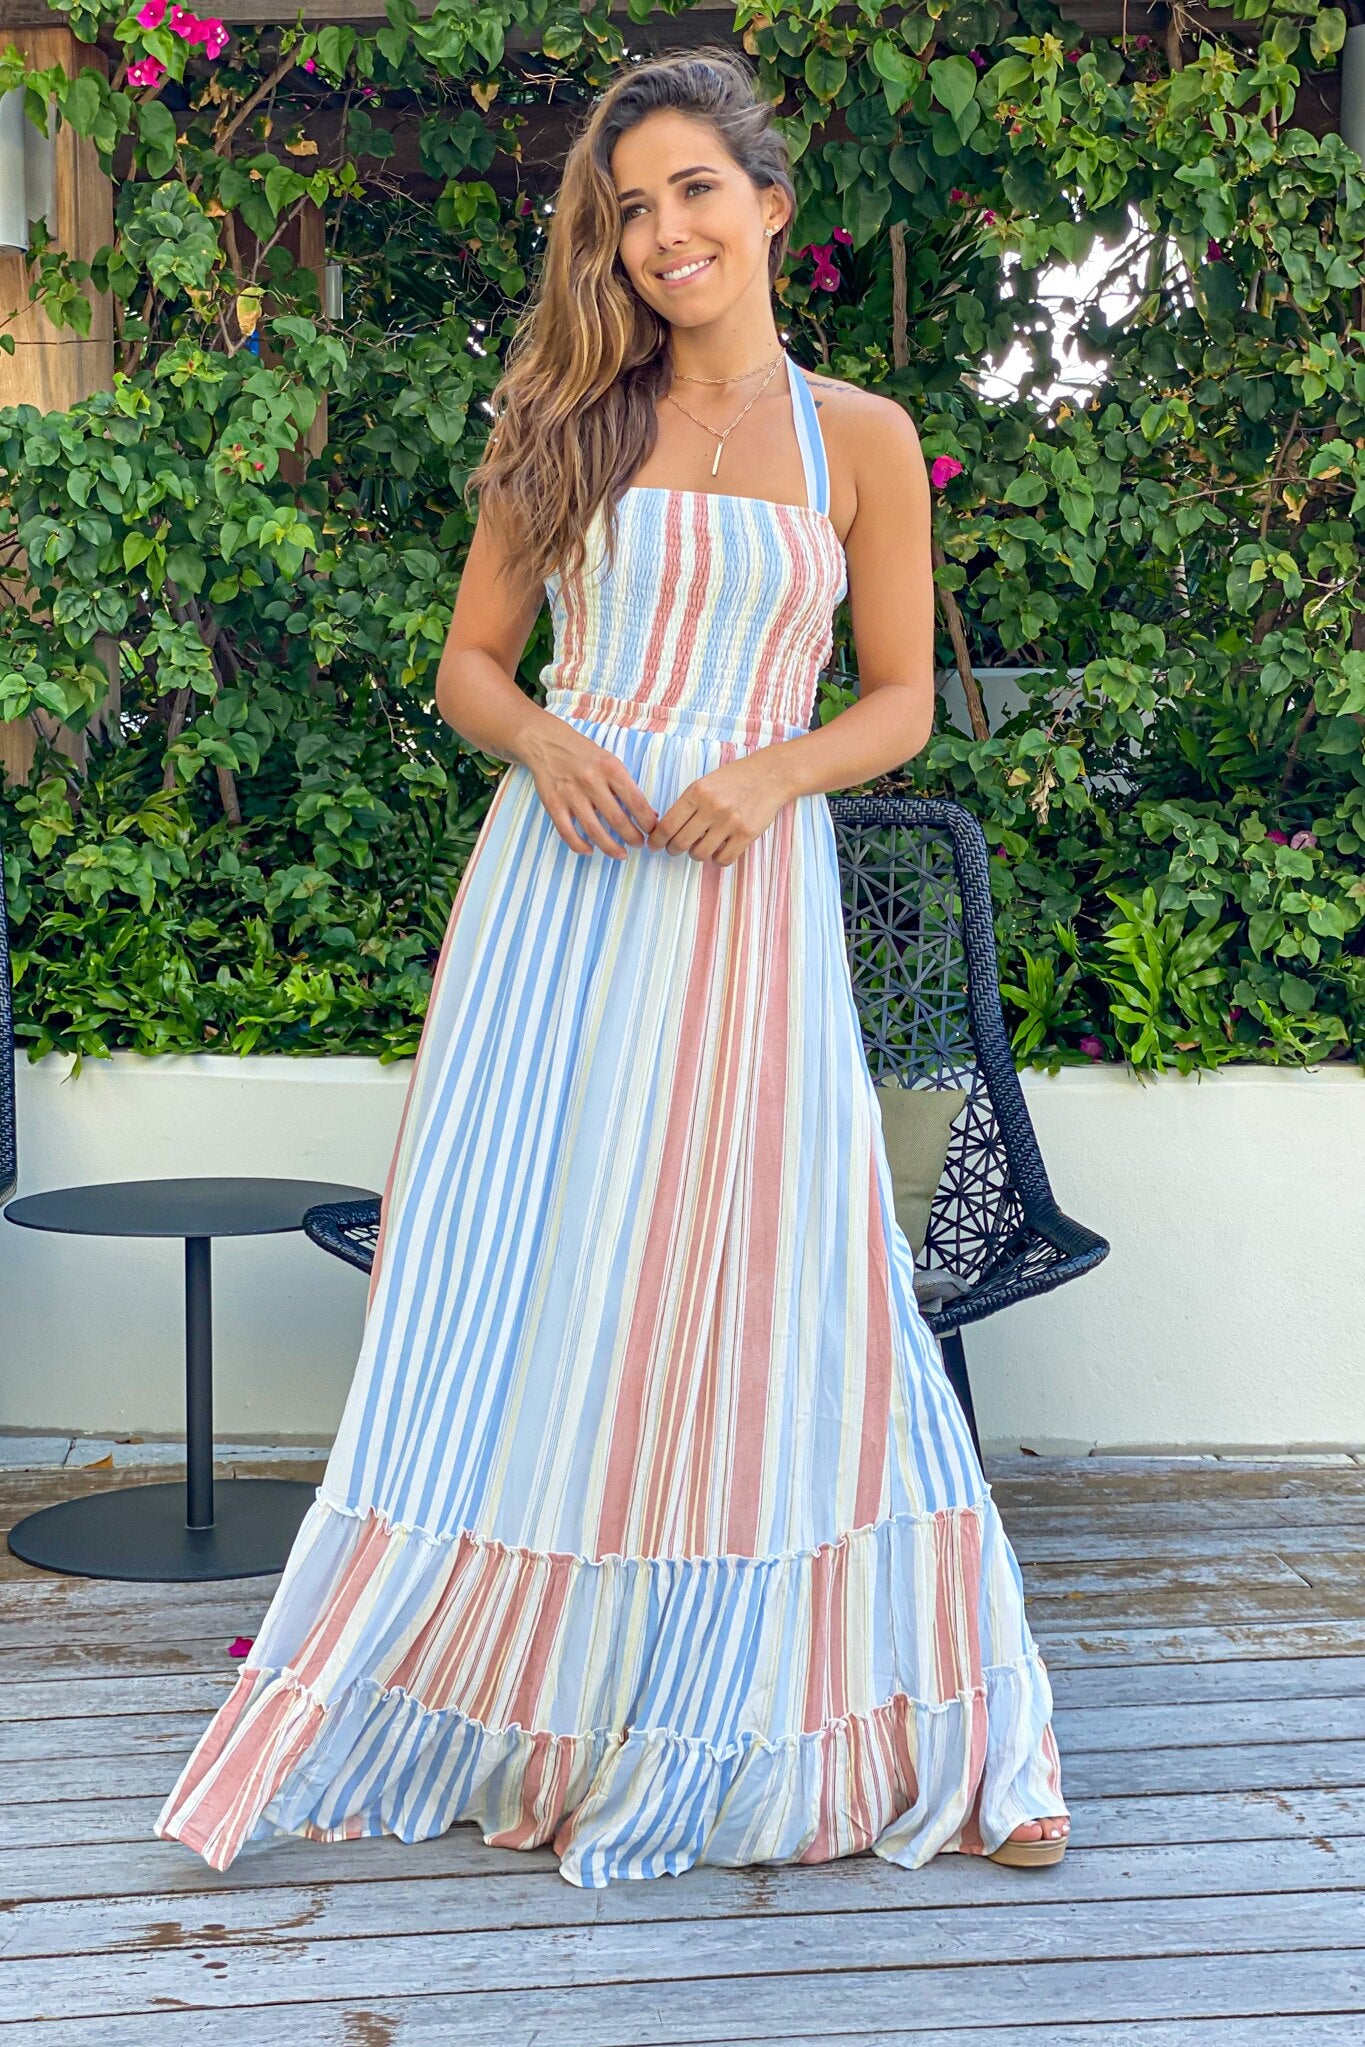 Striped Vacation Dress